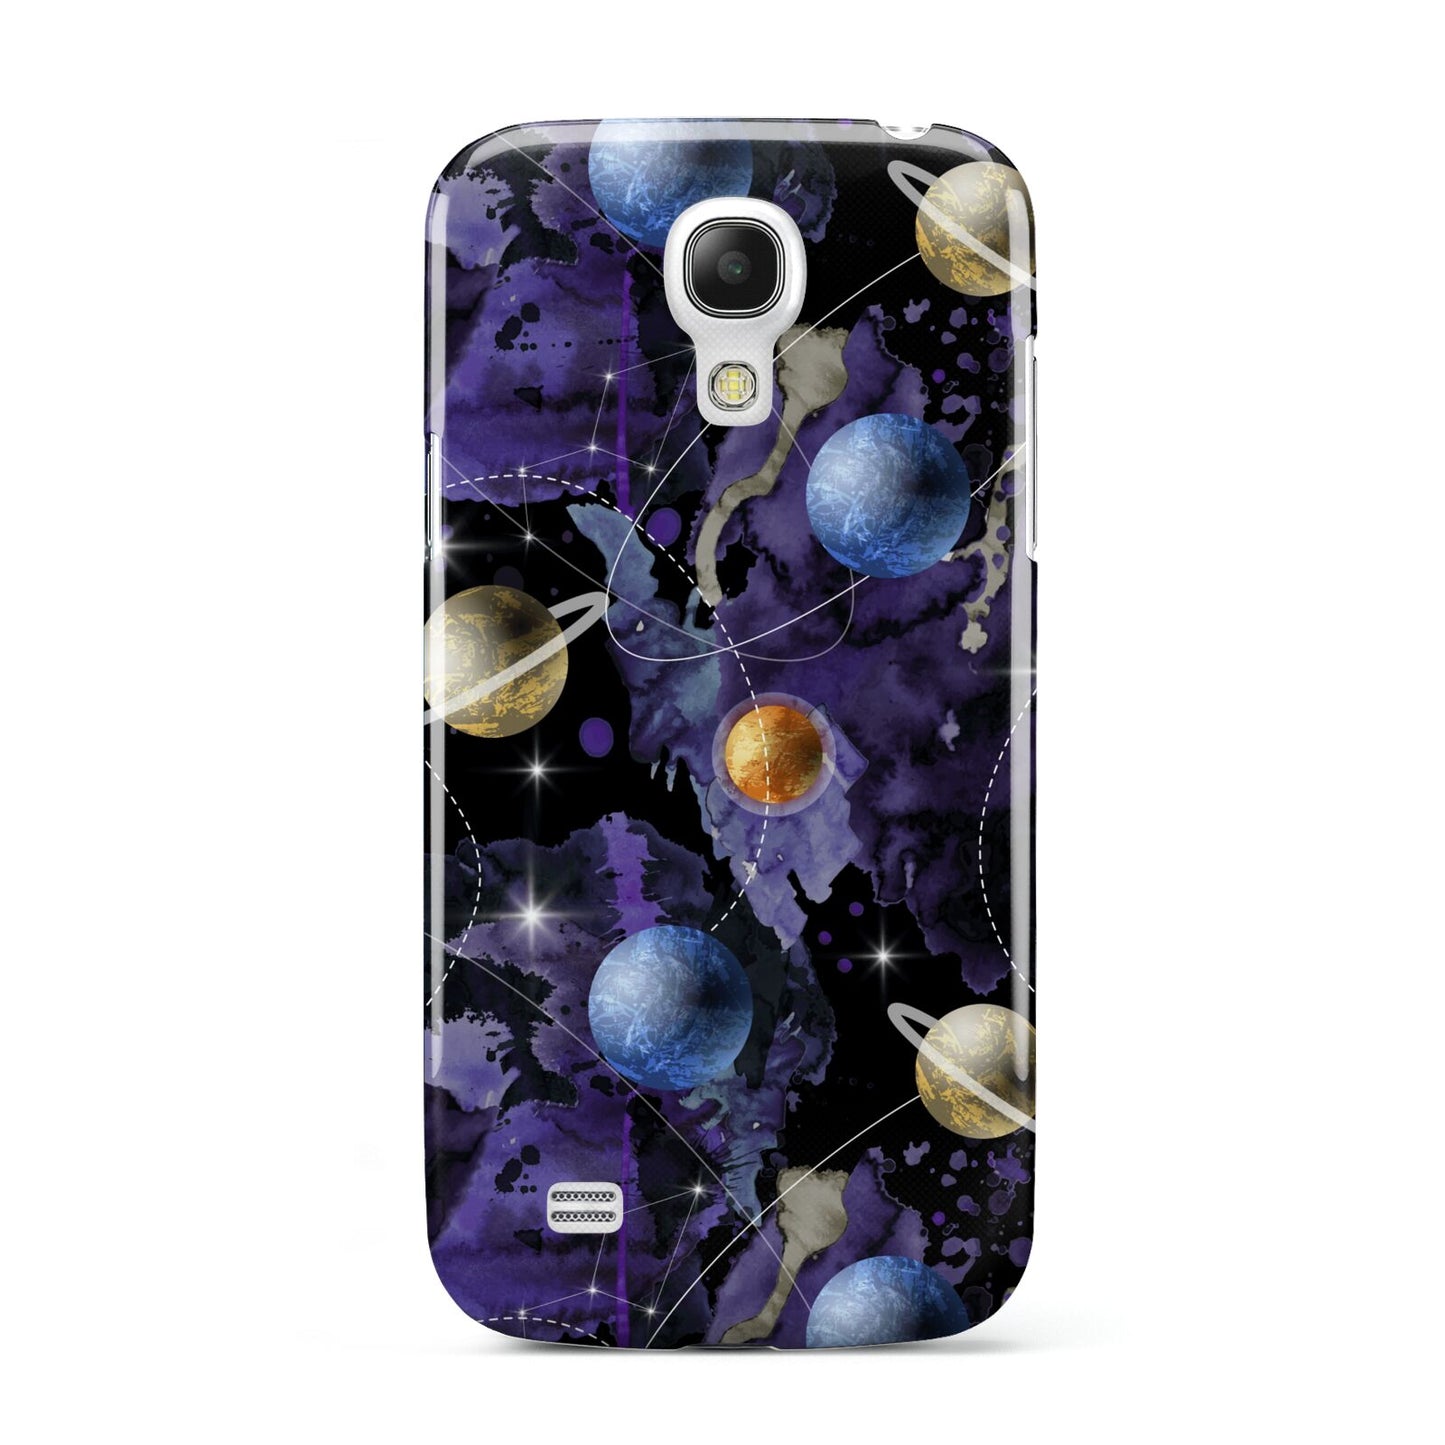 Planet Samsung Galaxy S4 Mini Case